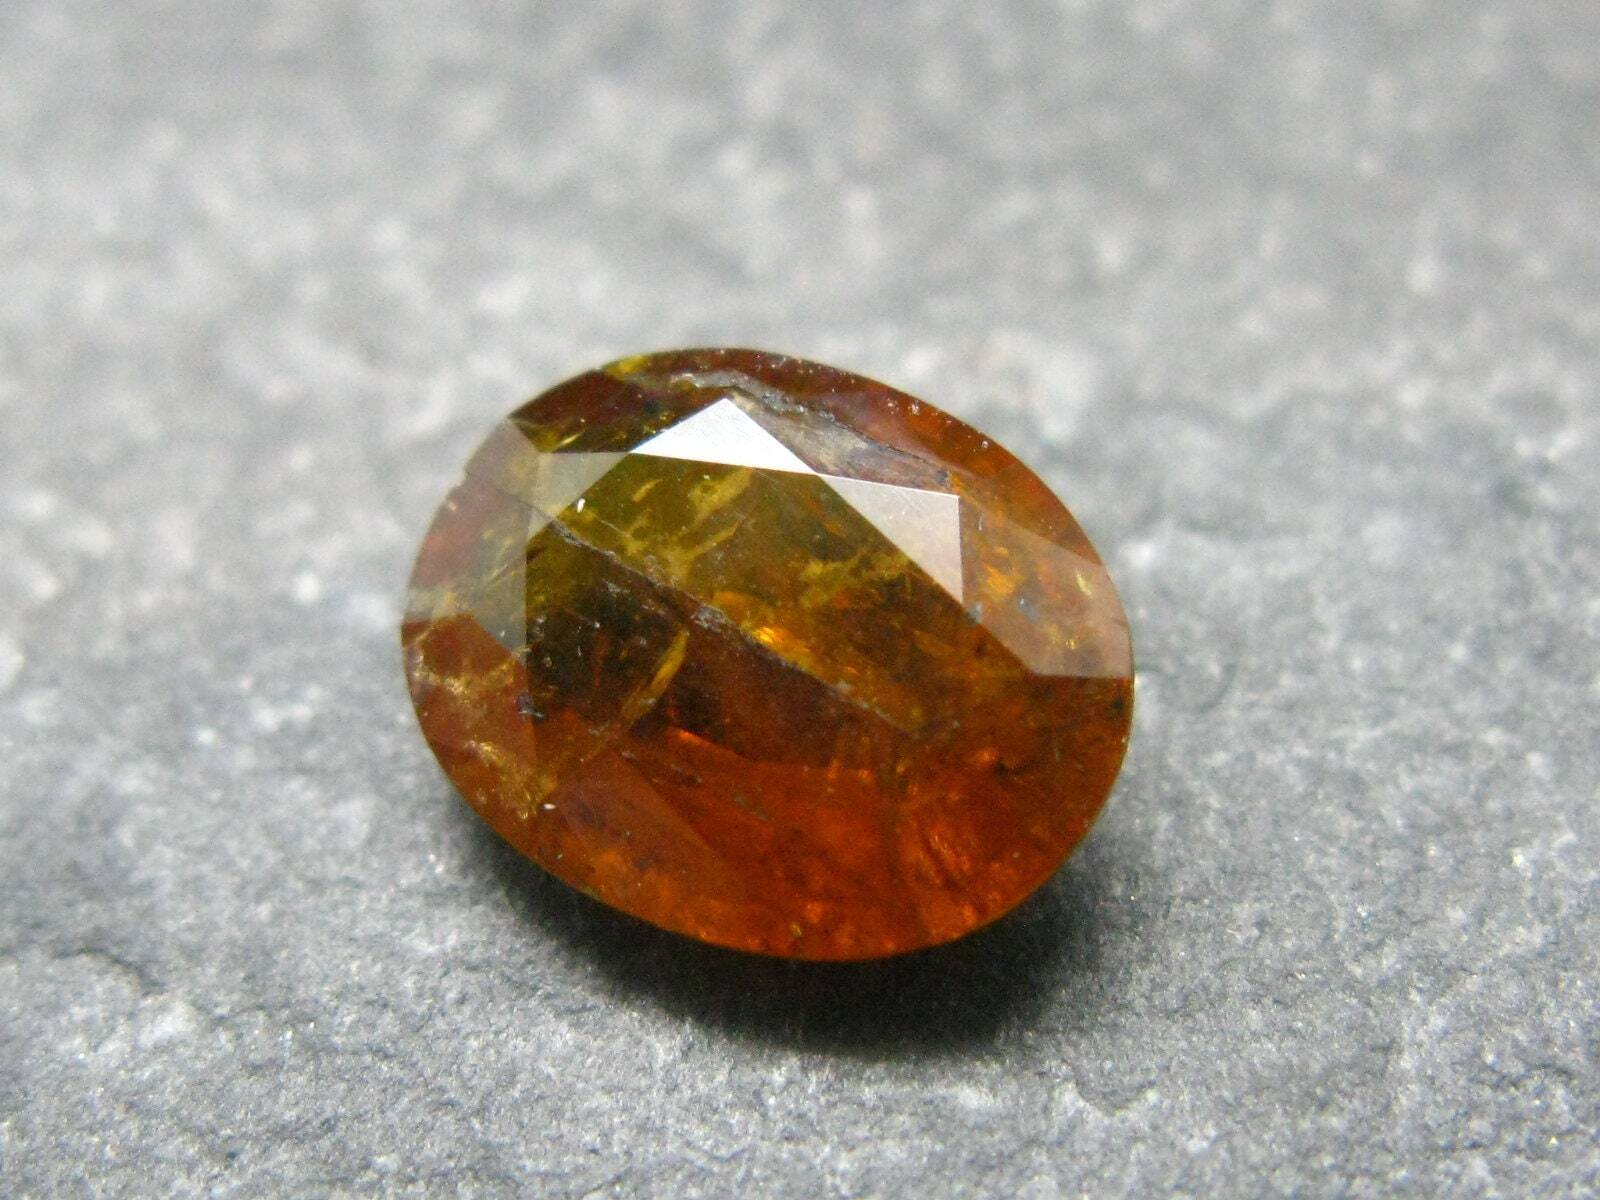 Rare Gem Bastnasite Cut Stone from Pakistan - 3.06 Carats